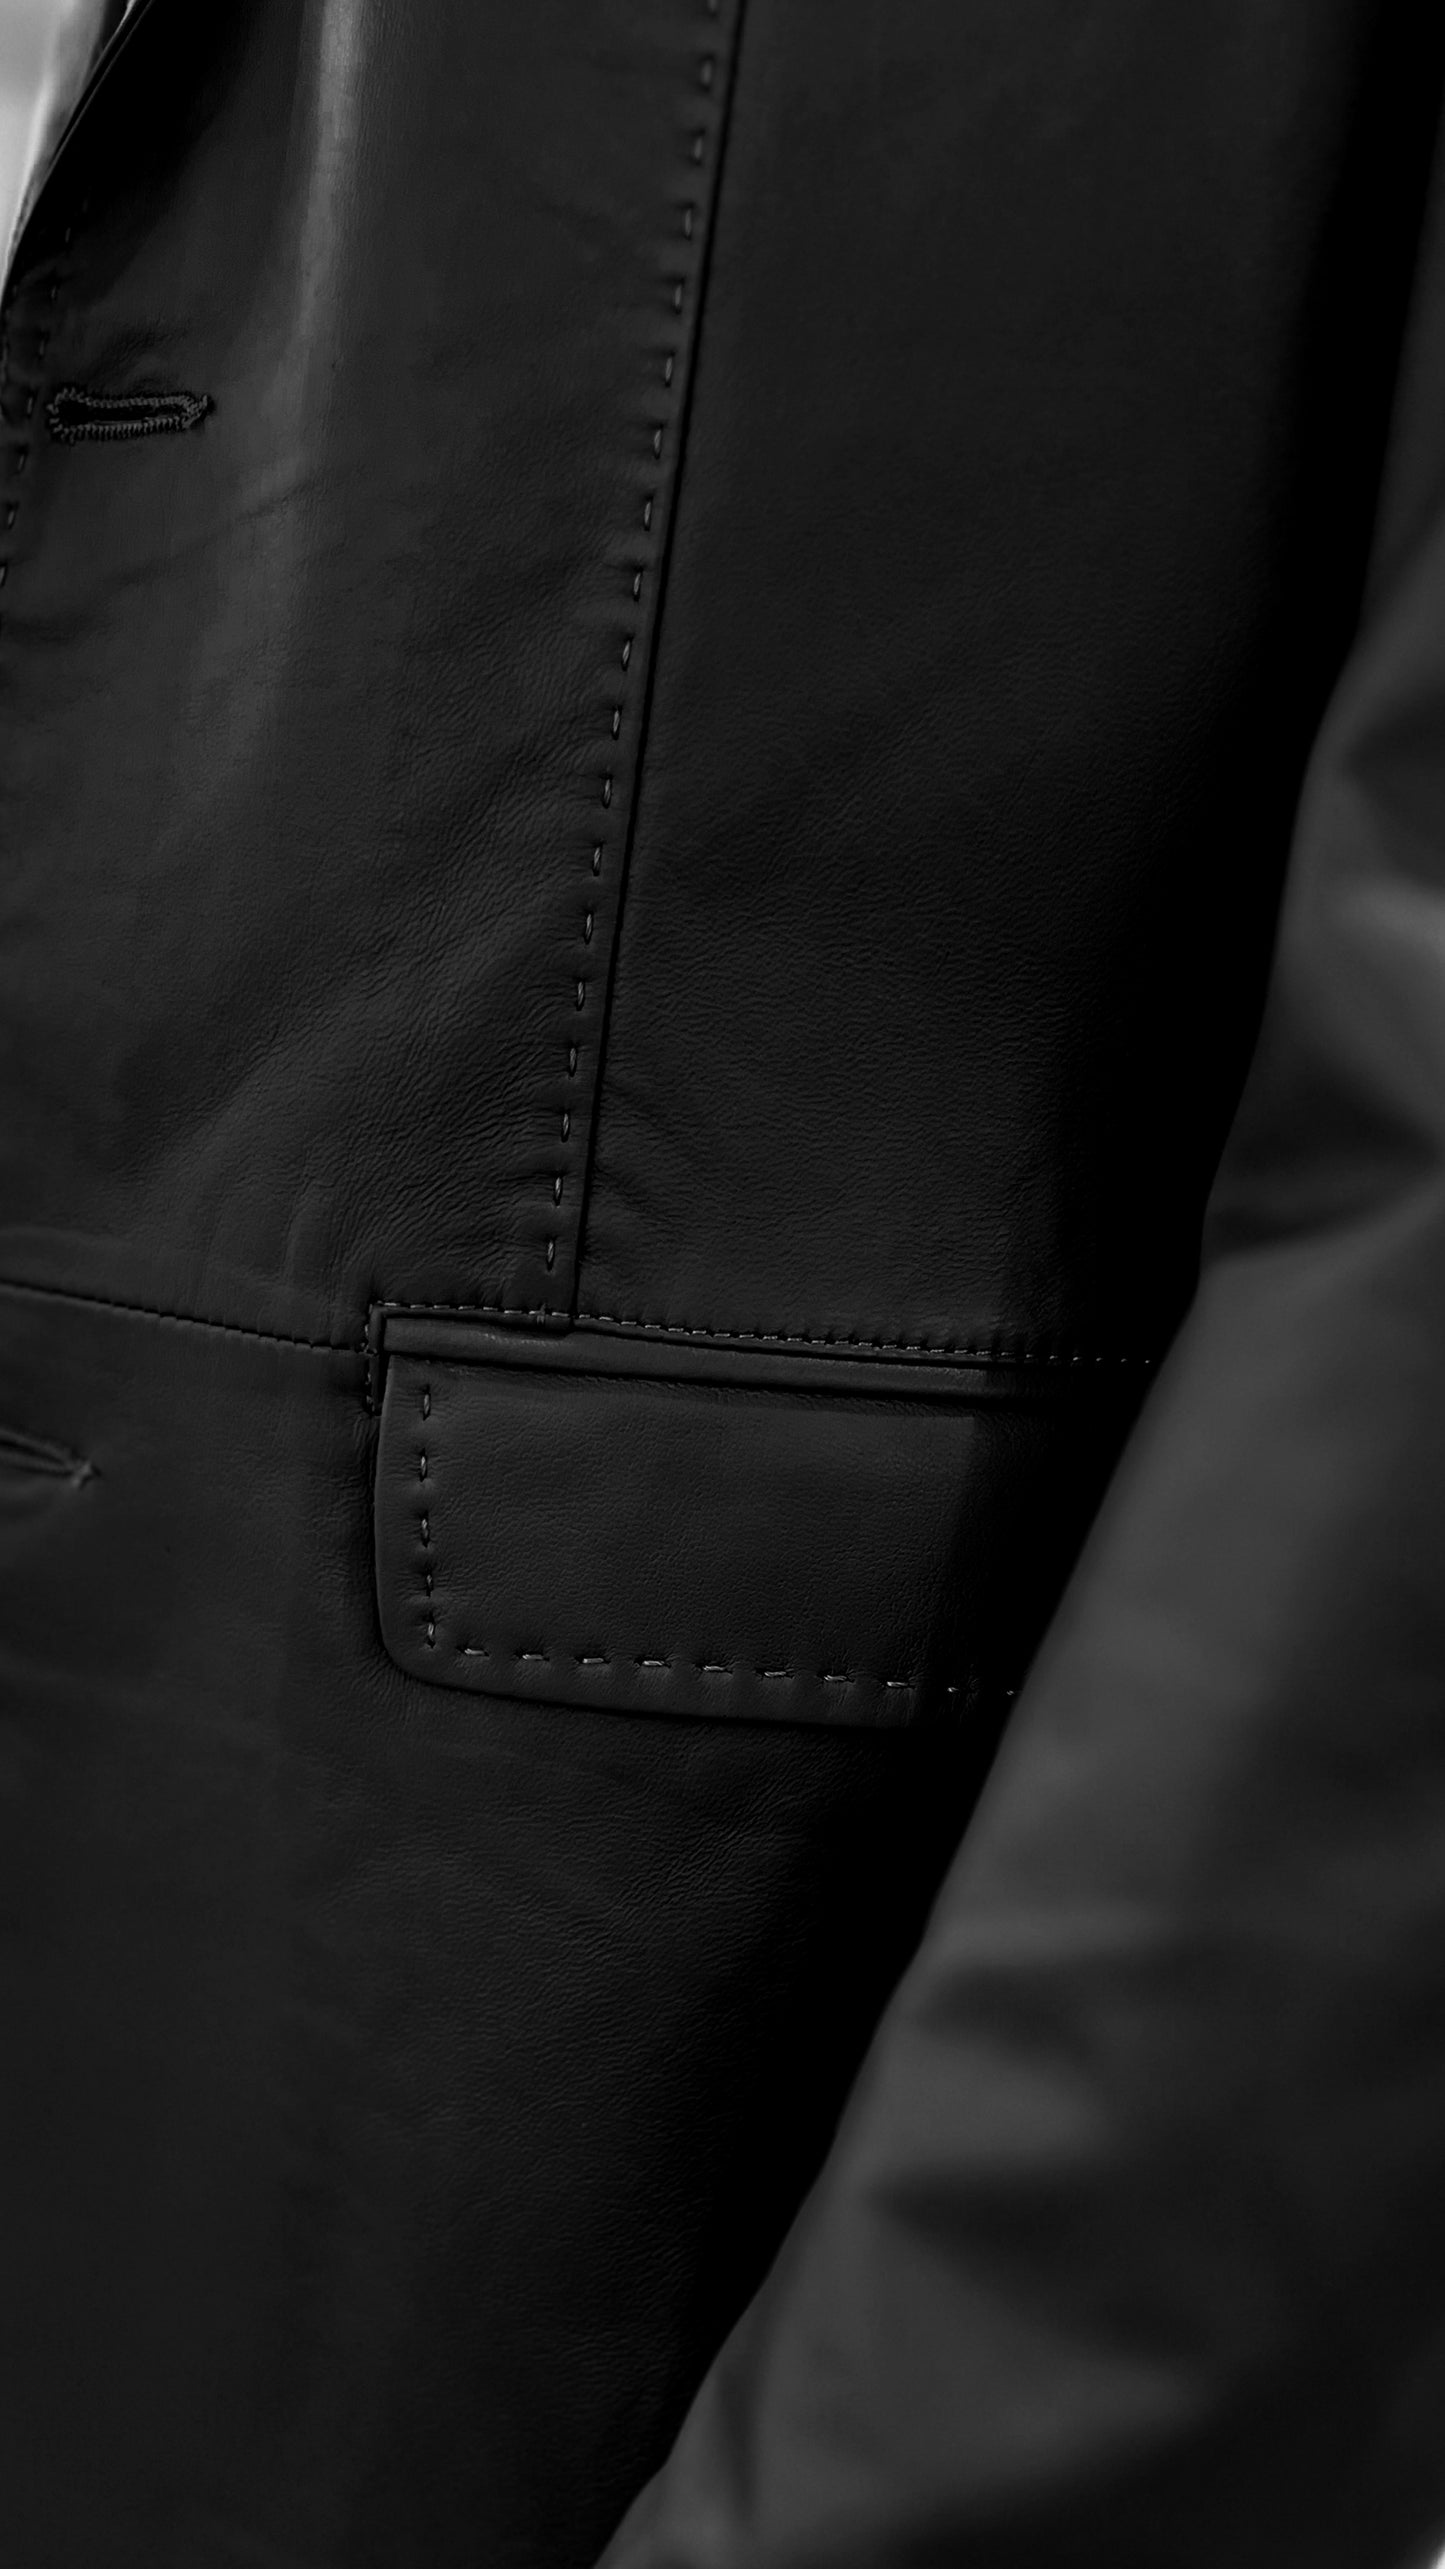 Vercini Premium Leather Blazer